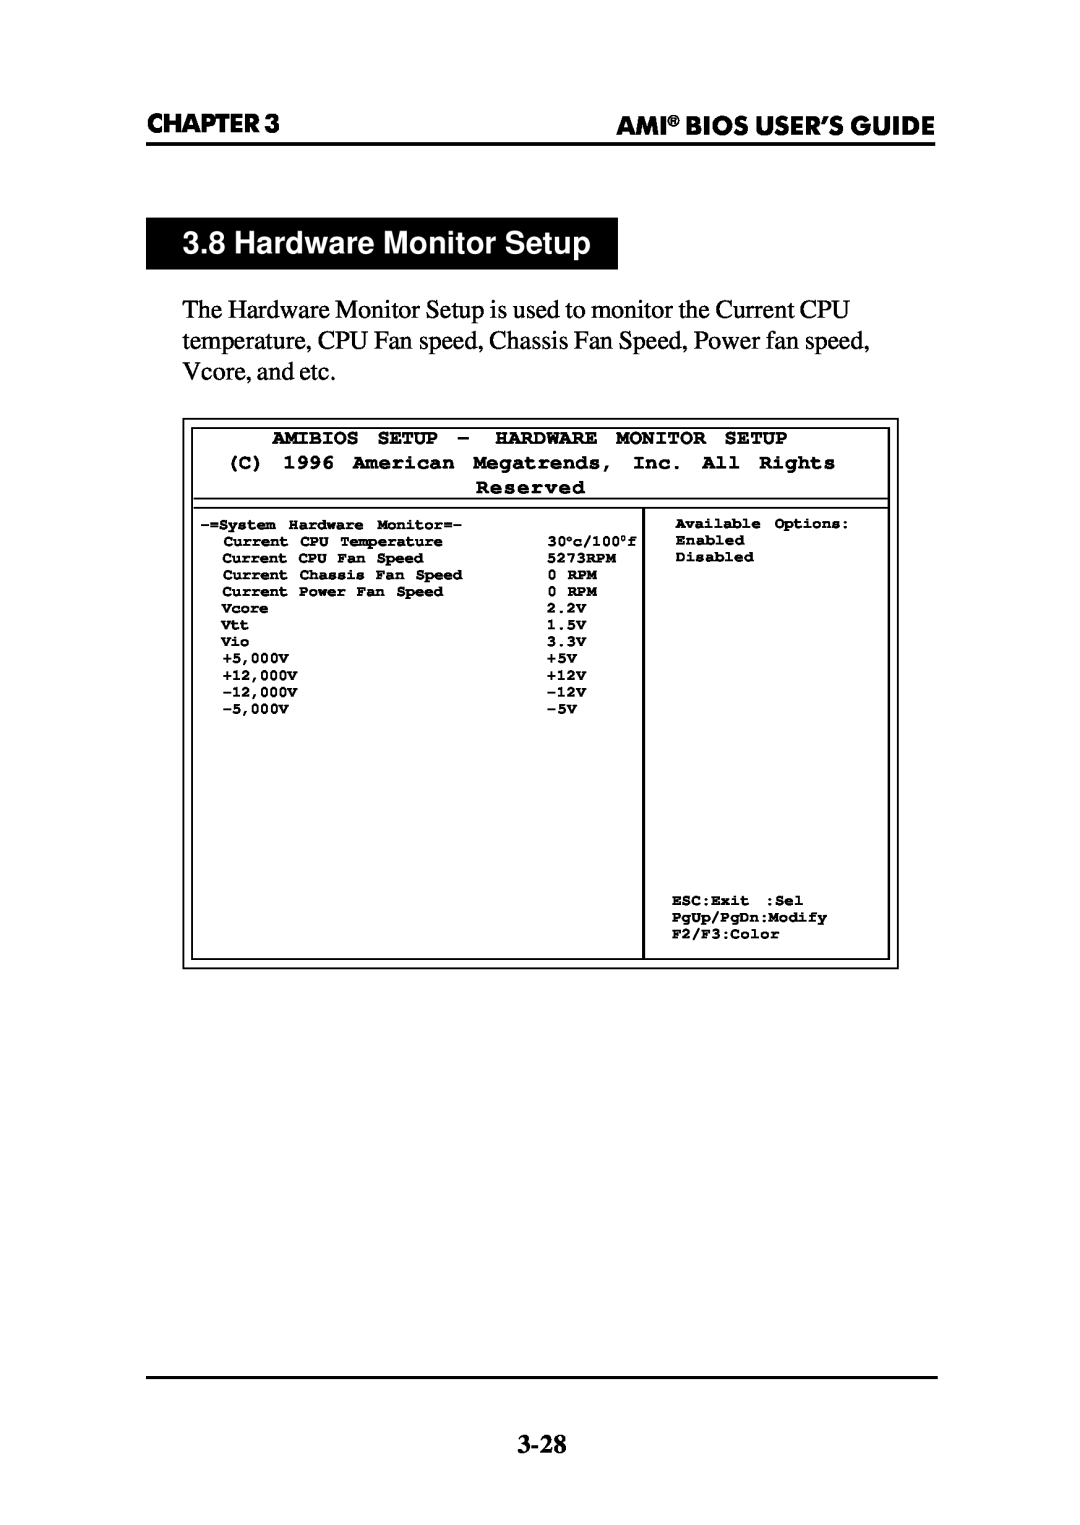 Intel MS-6112 manual Hardware Monitor Setup, Chapter, Ami Bios User’S Guide 